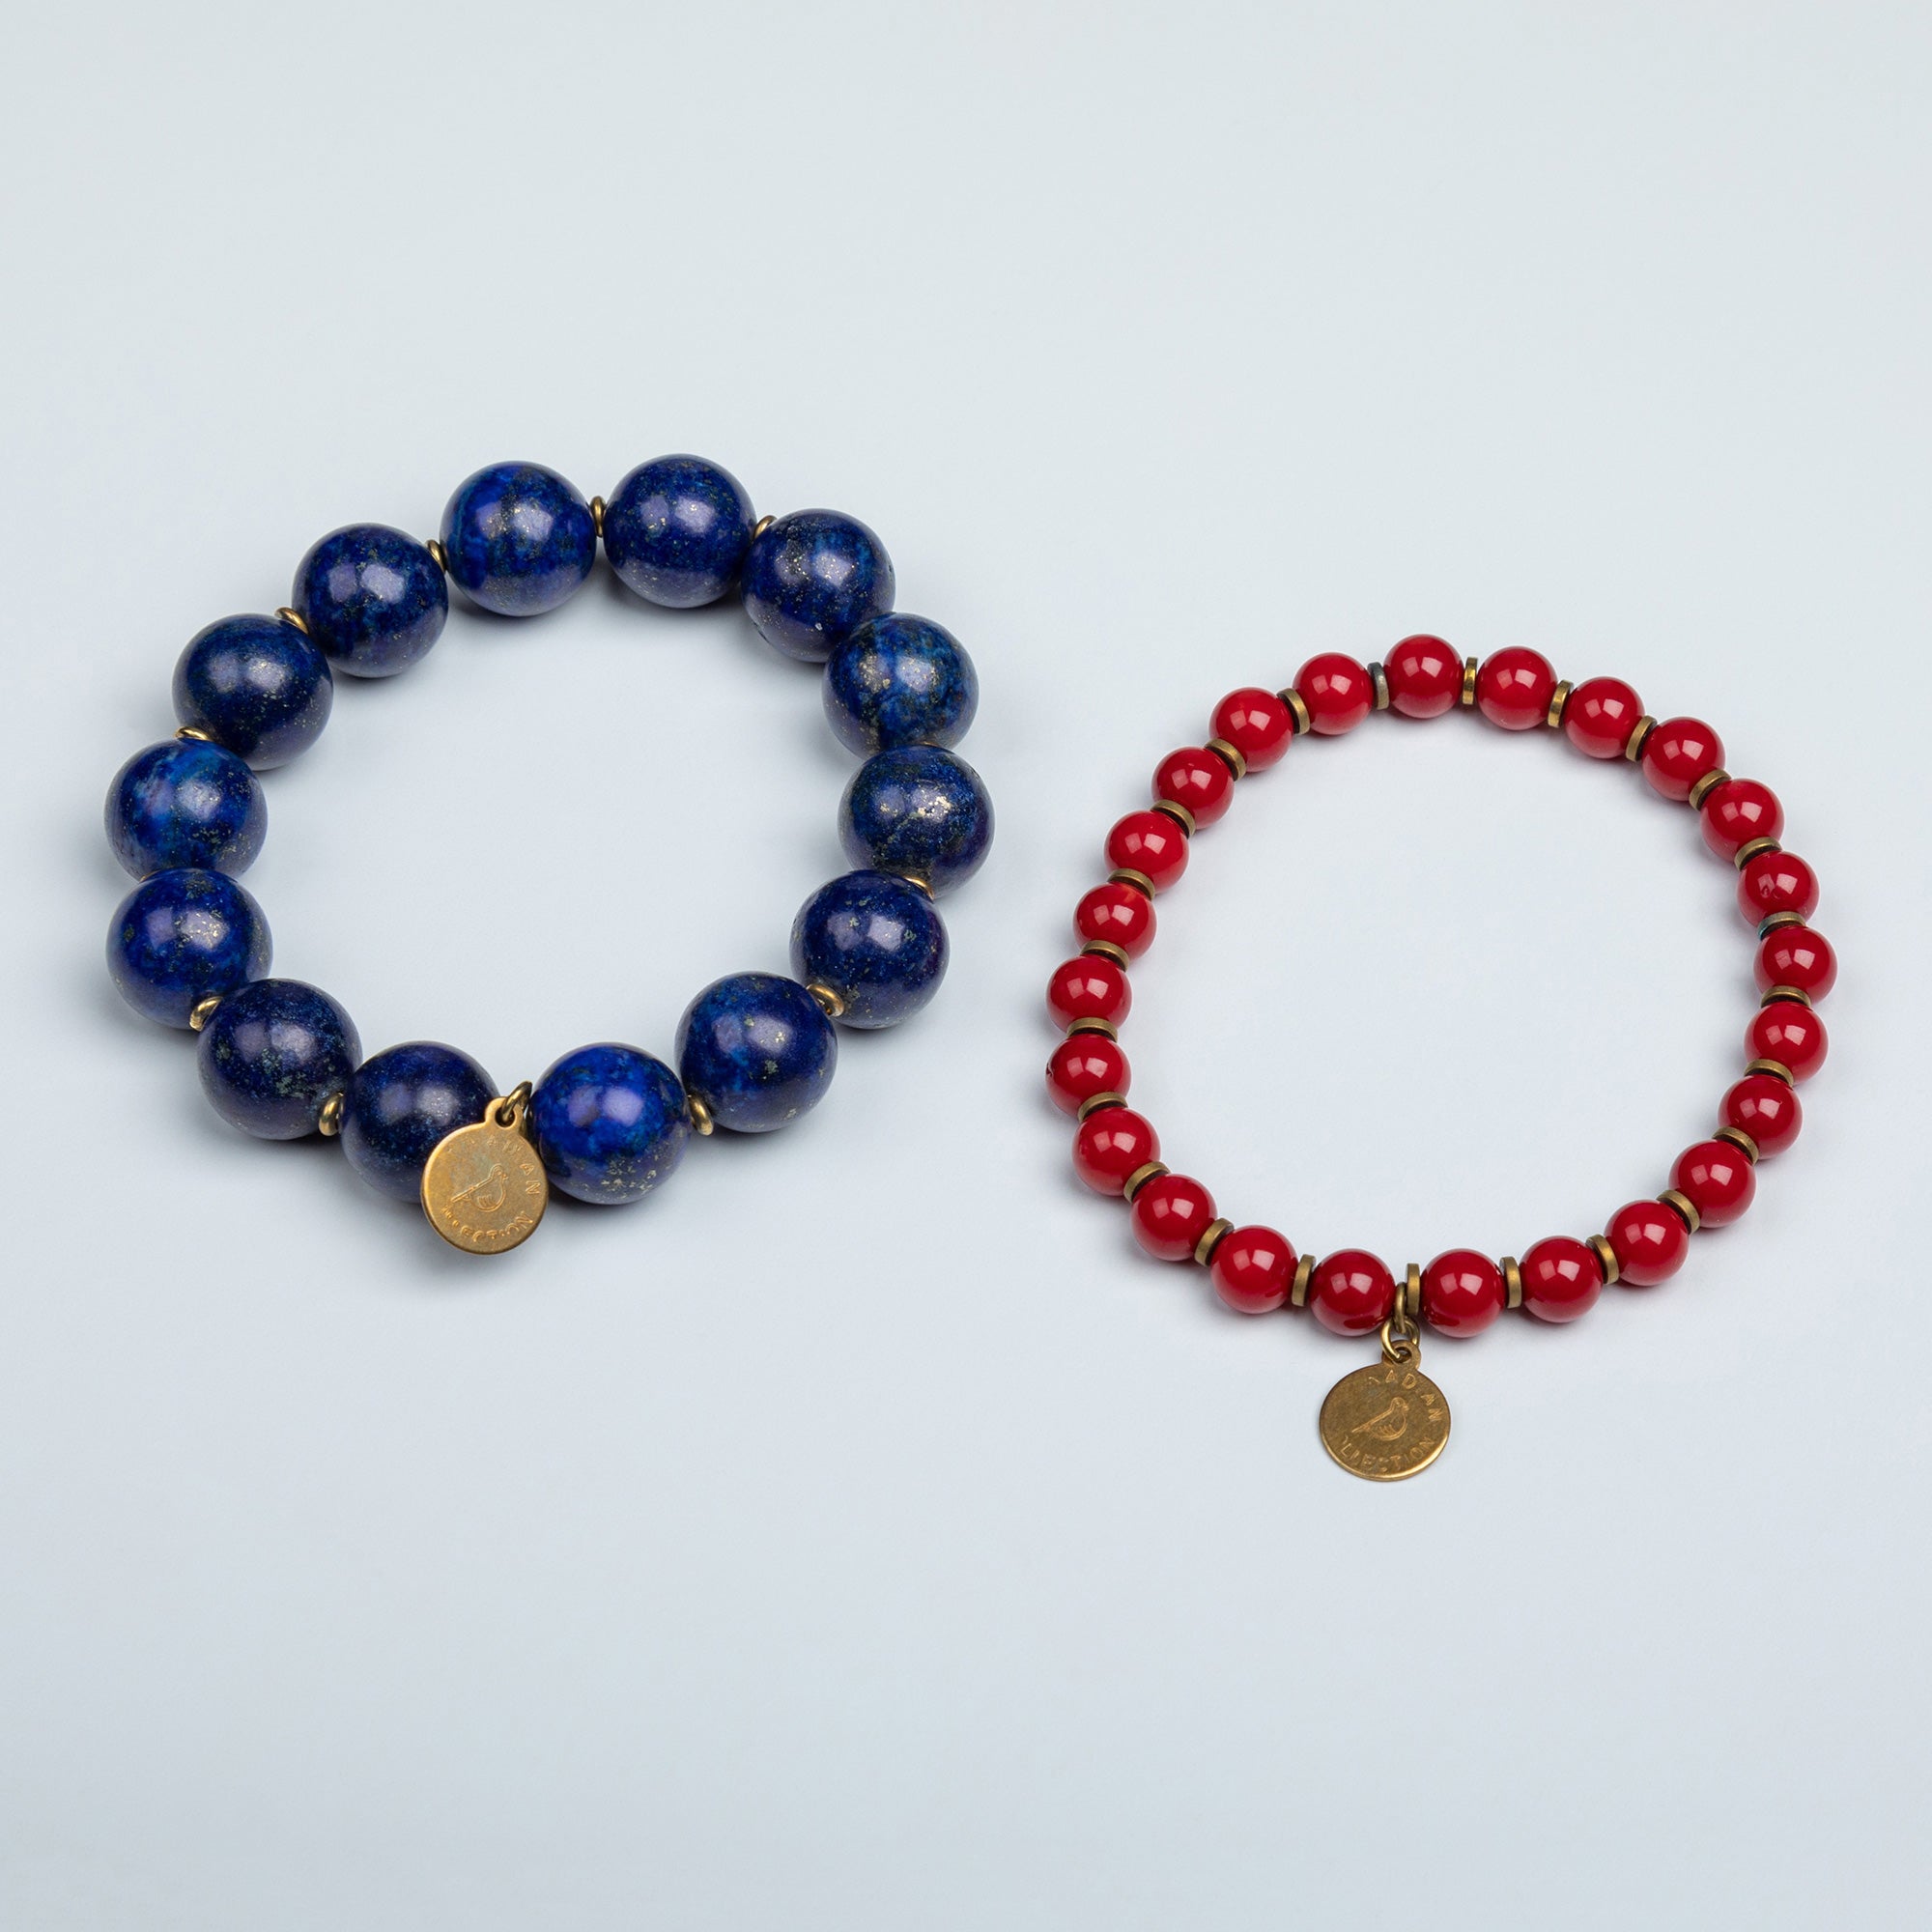 Iraqi Chunky Beads Bracelet - Navy